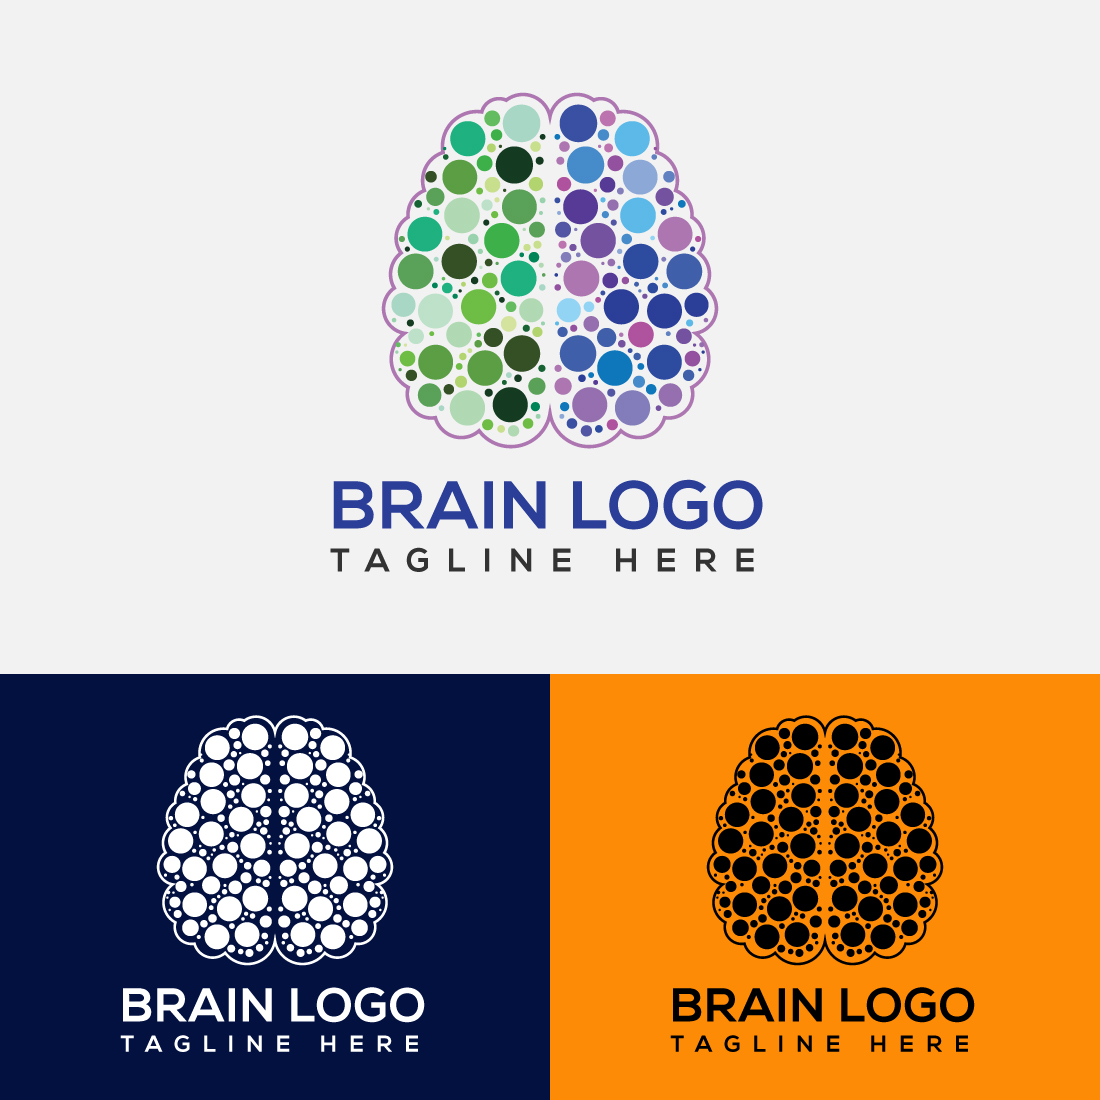 Brain Logo Design Vector Template main cover.